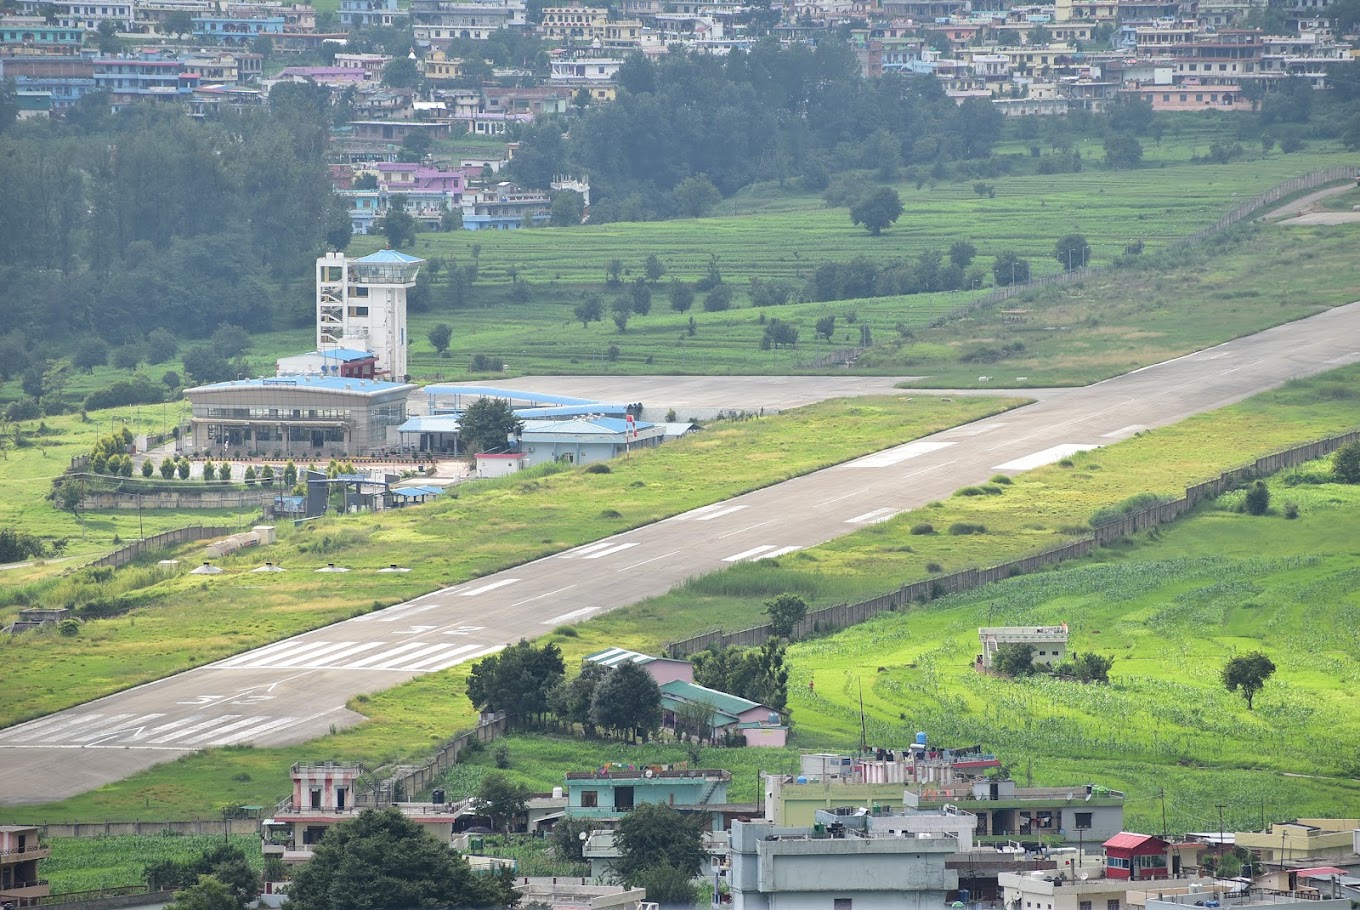 Naini Saini Airport Pithoragarh